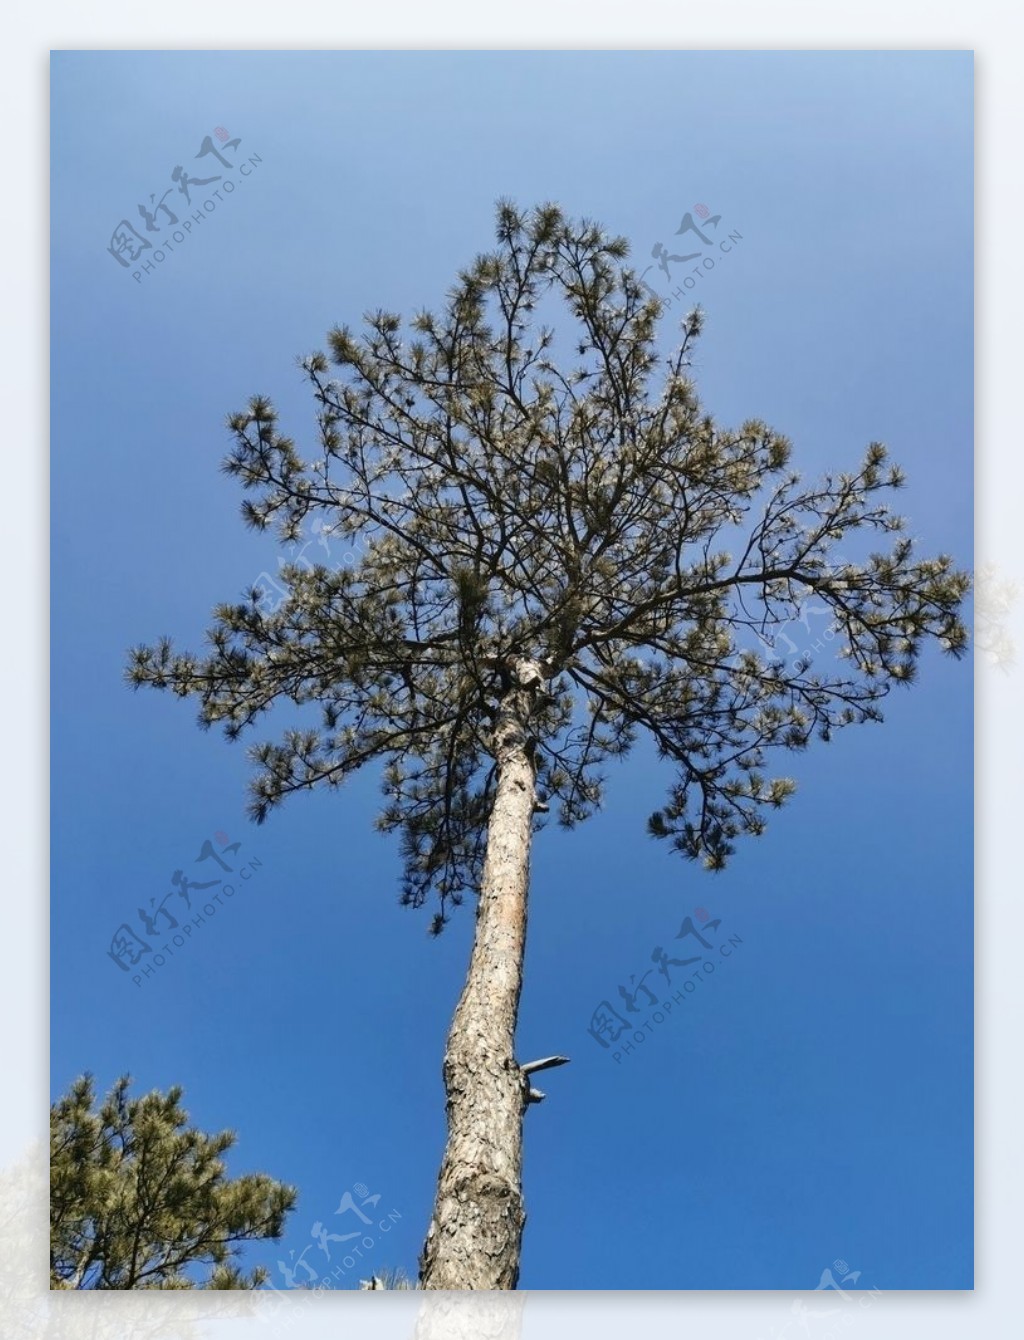 EX1-『蓝天白云映衬下的松树』123...12p-中关村在线摄影论坛